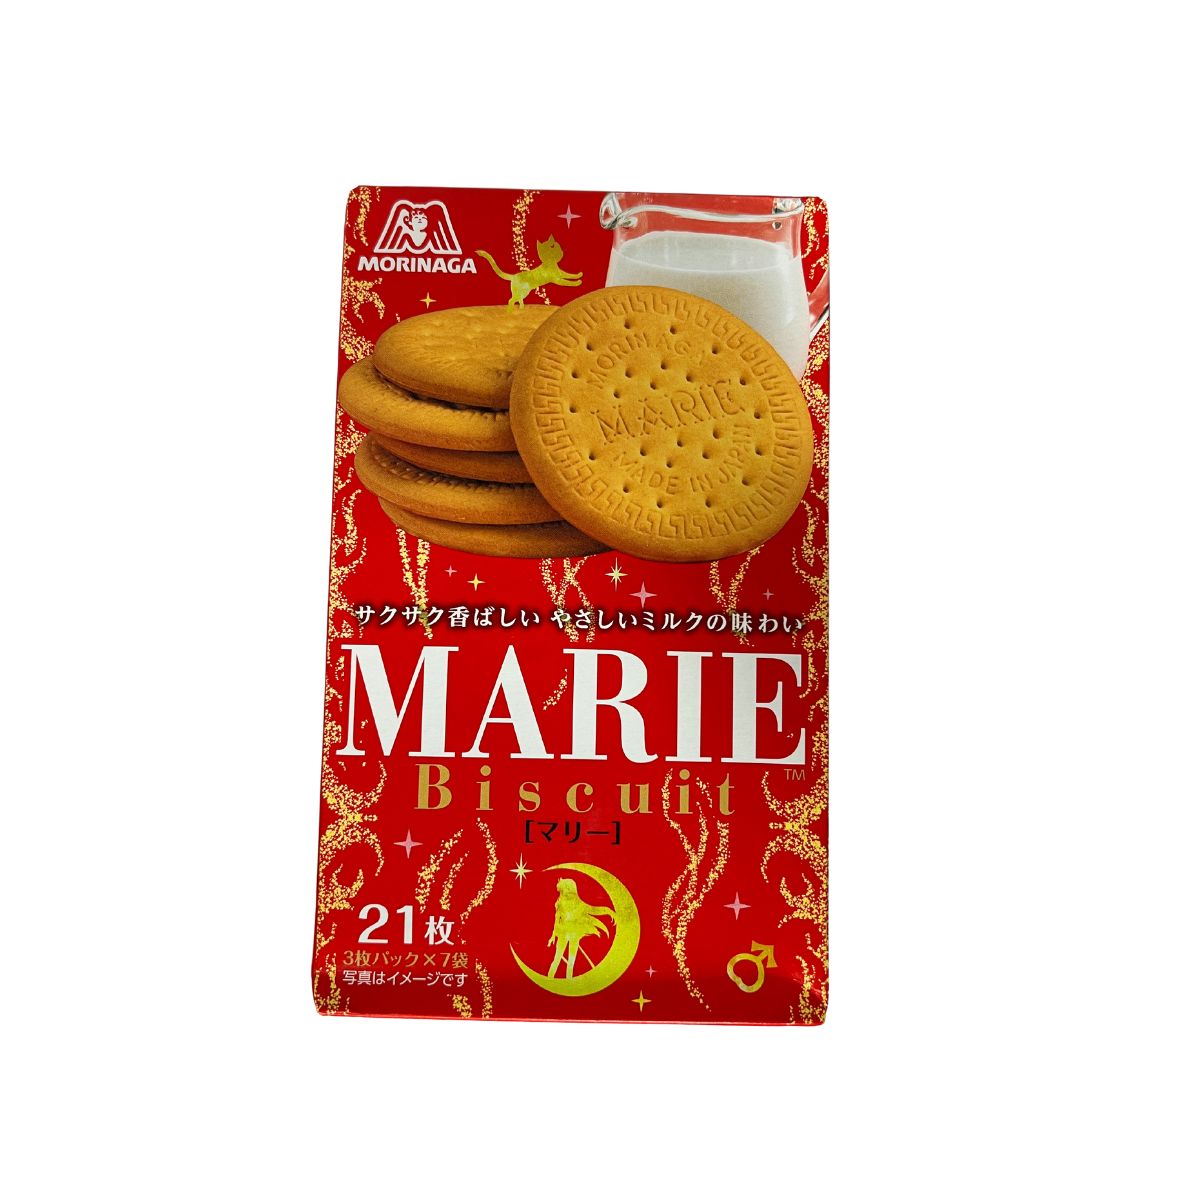 Marie Biscuit